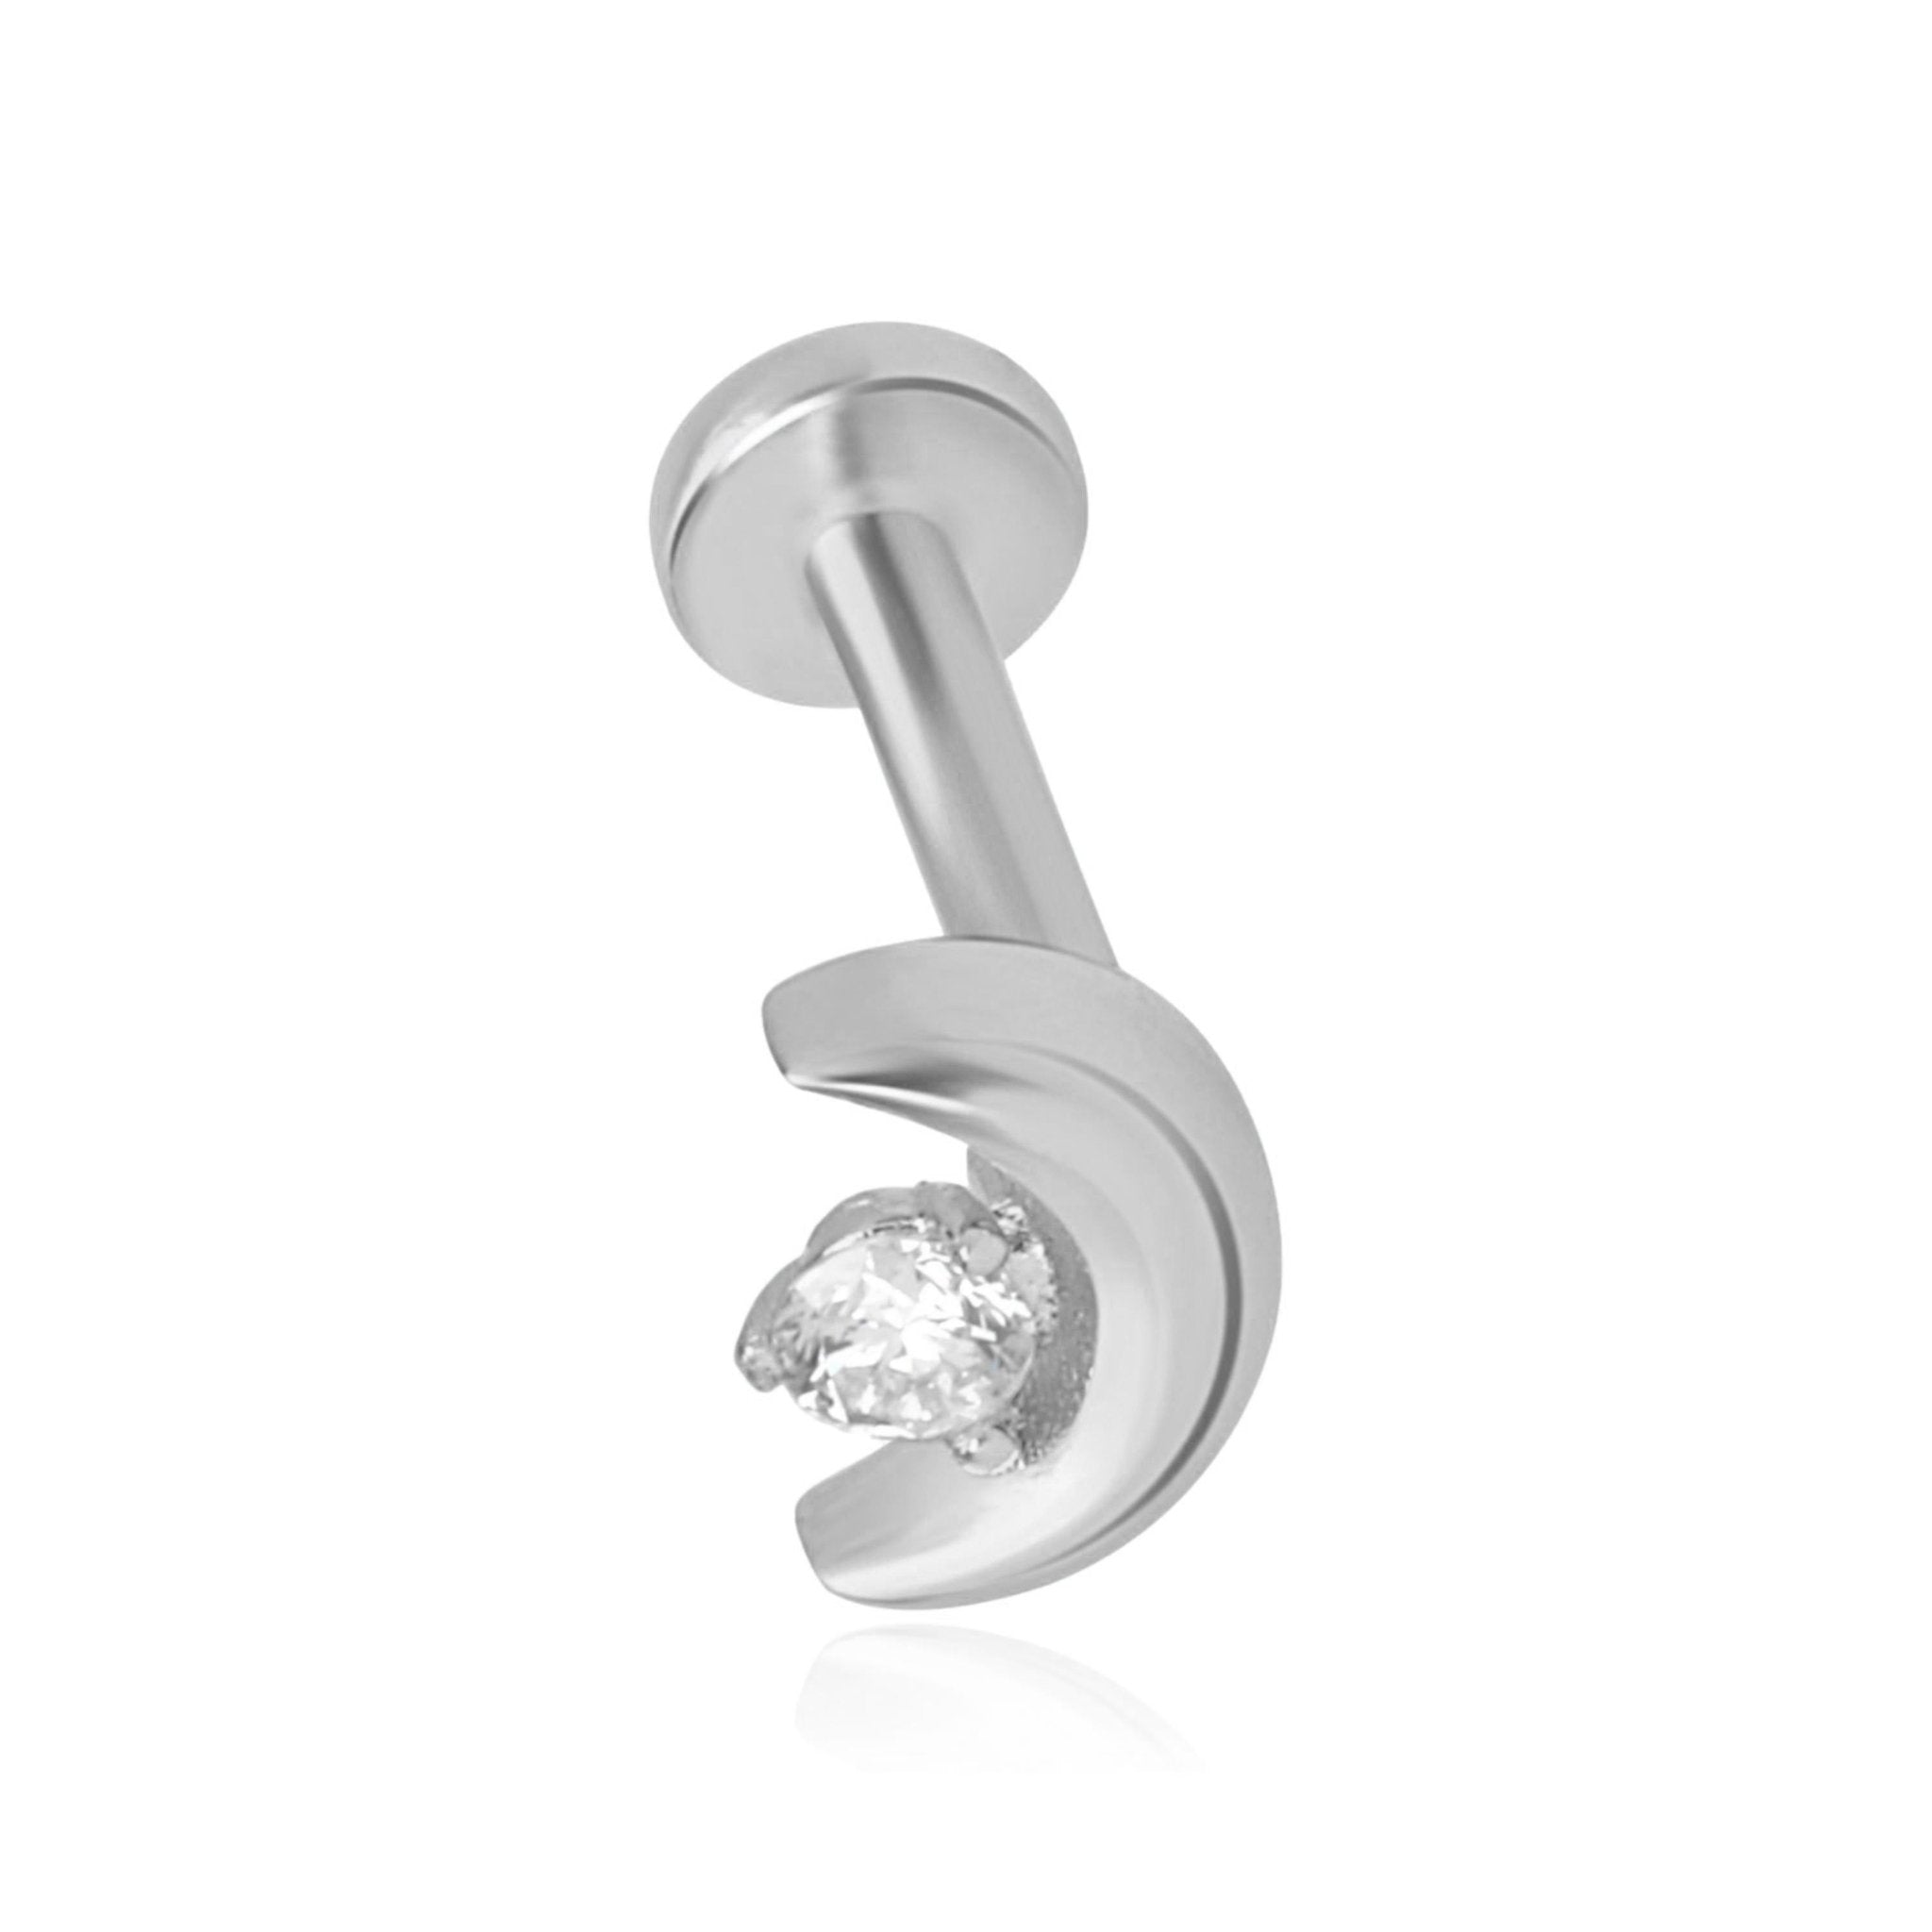 Diamond Crescent Moon Flat Back Earring Earrings Estella Collection #product_description# 18476 14k Birthstone Birthstone Earrings #tag4# #tag5# #tag6# #tag7# #tag8# #tag9# #tag10# 5MM